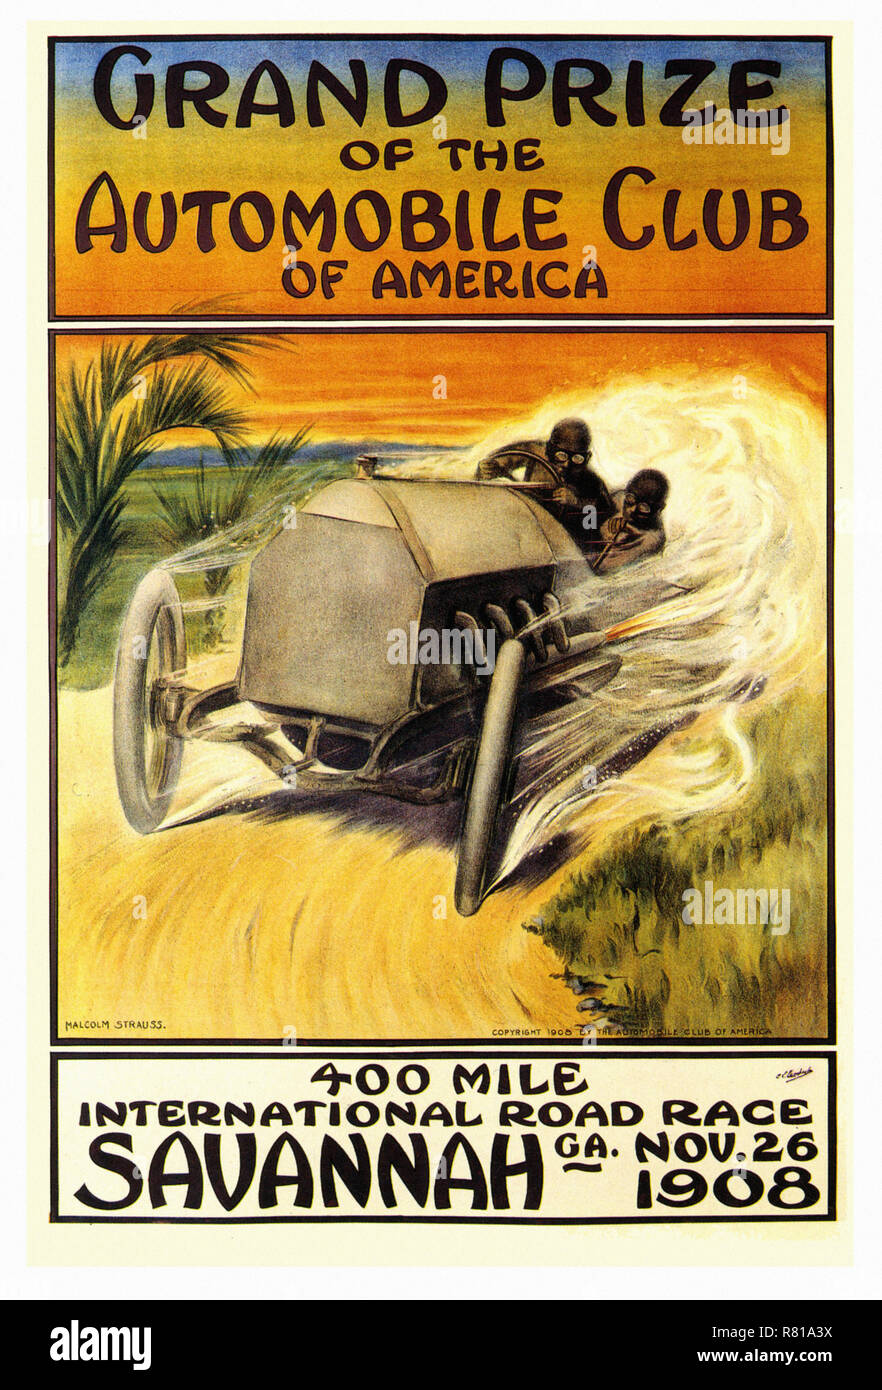 The Savannah Georgia International 1908 Automobile Race - Vintage car's advertising poster Stock Photo